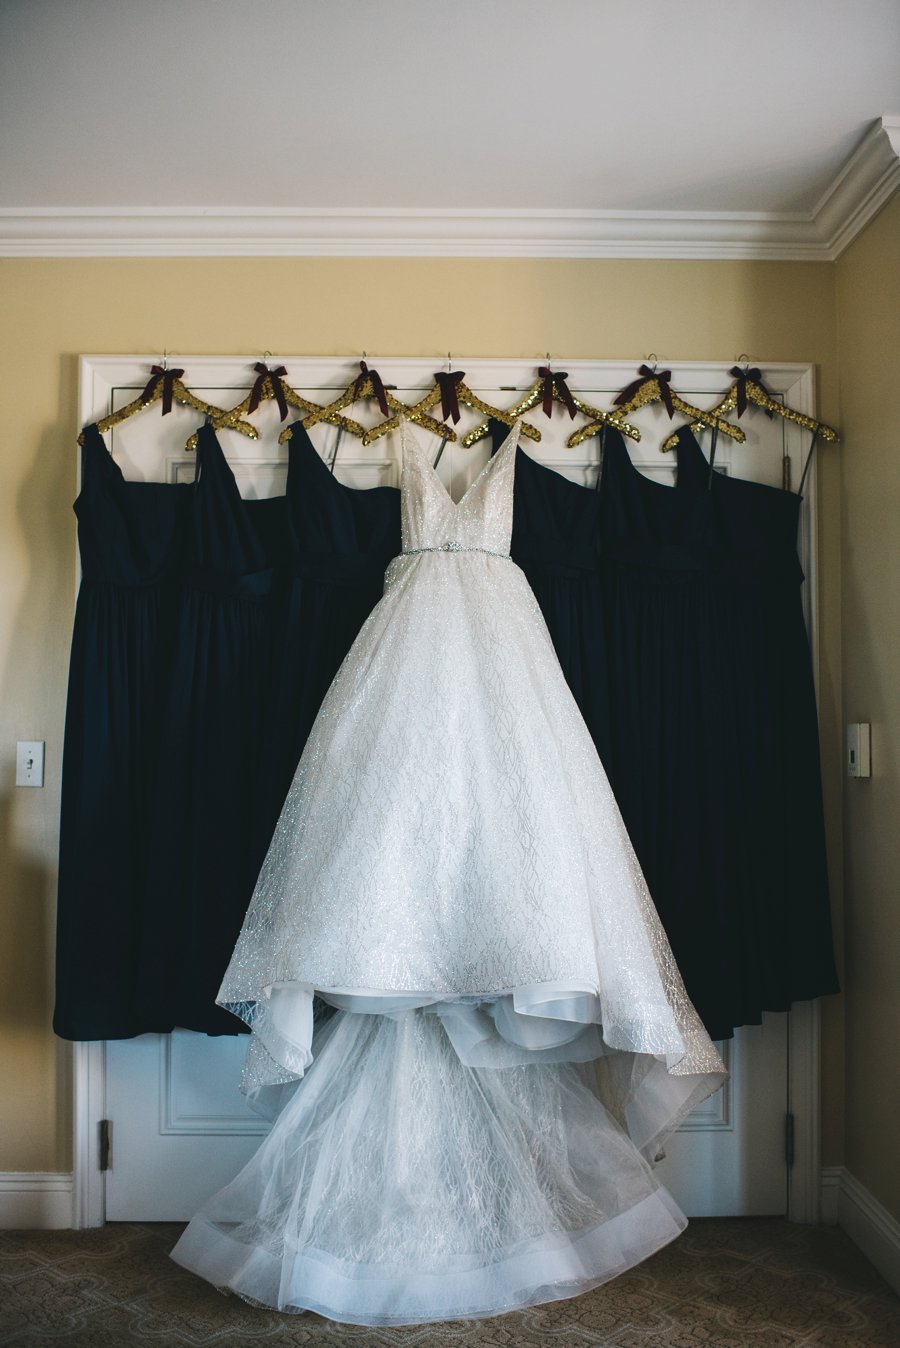 An Elegant Burgundy and Navy Fairytale Orlando Wedding Day via TheELD.com